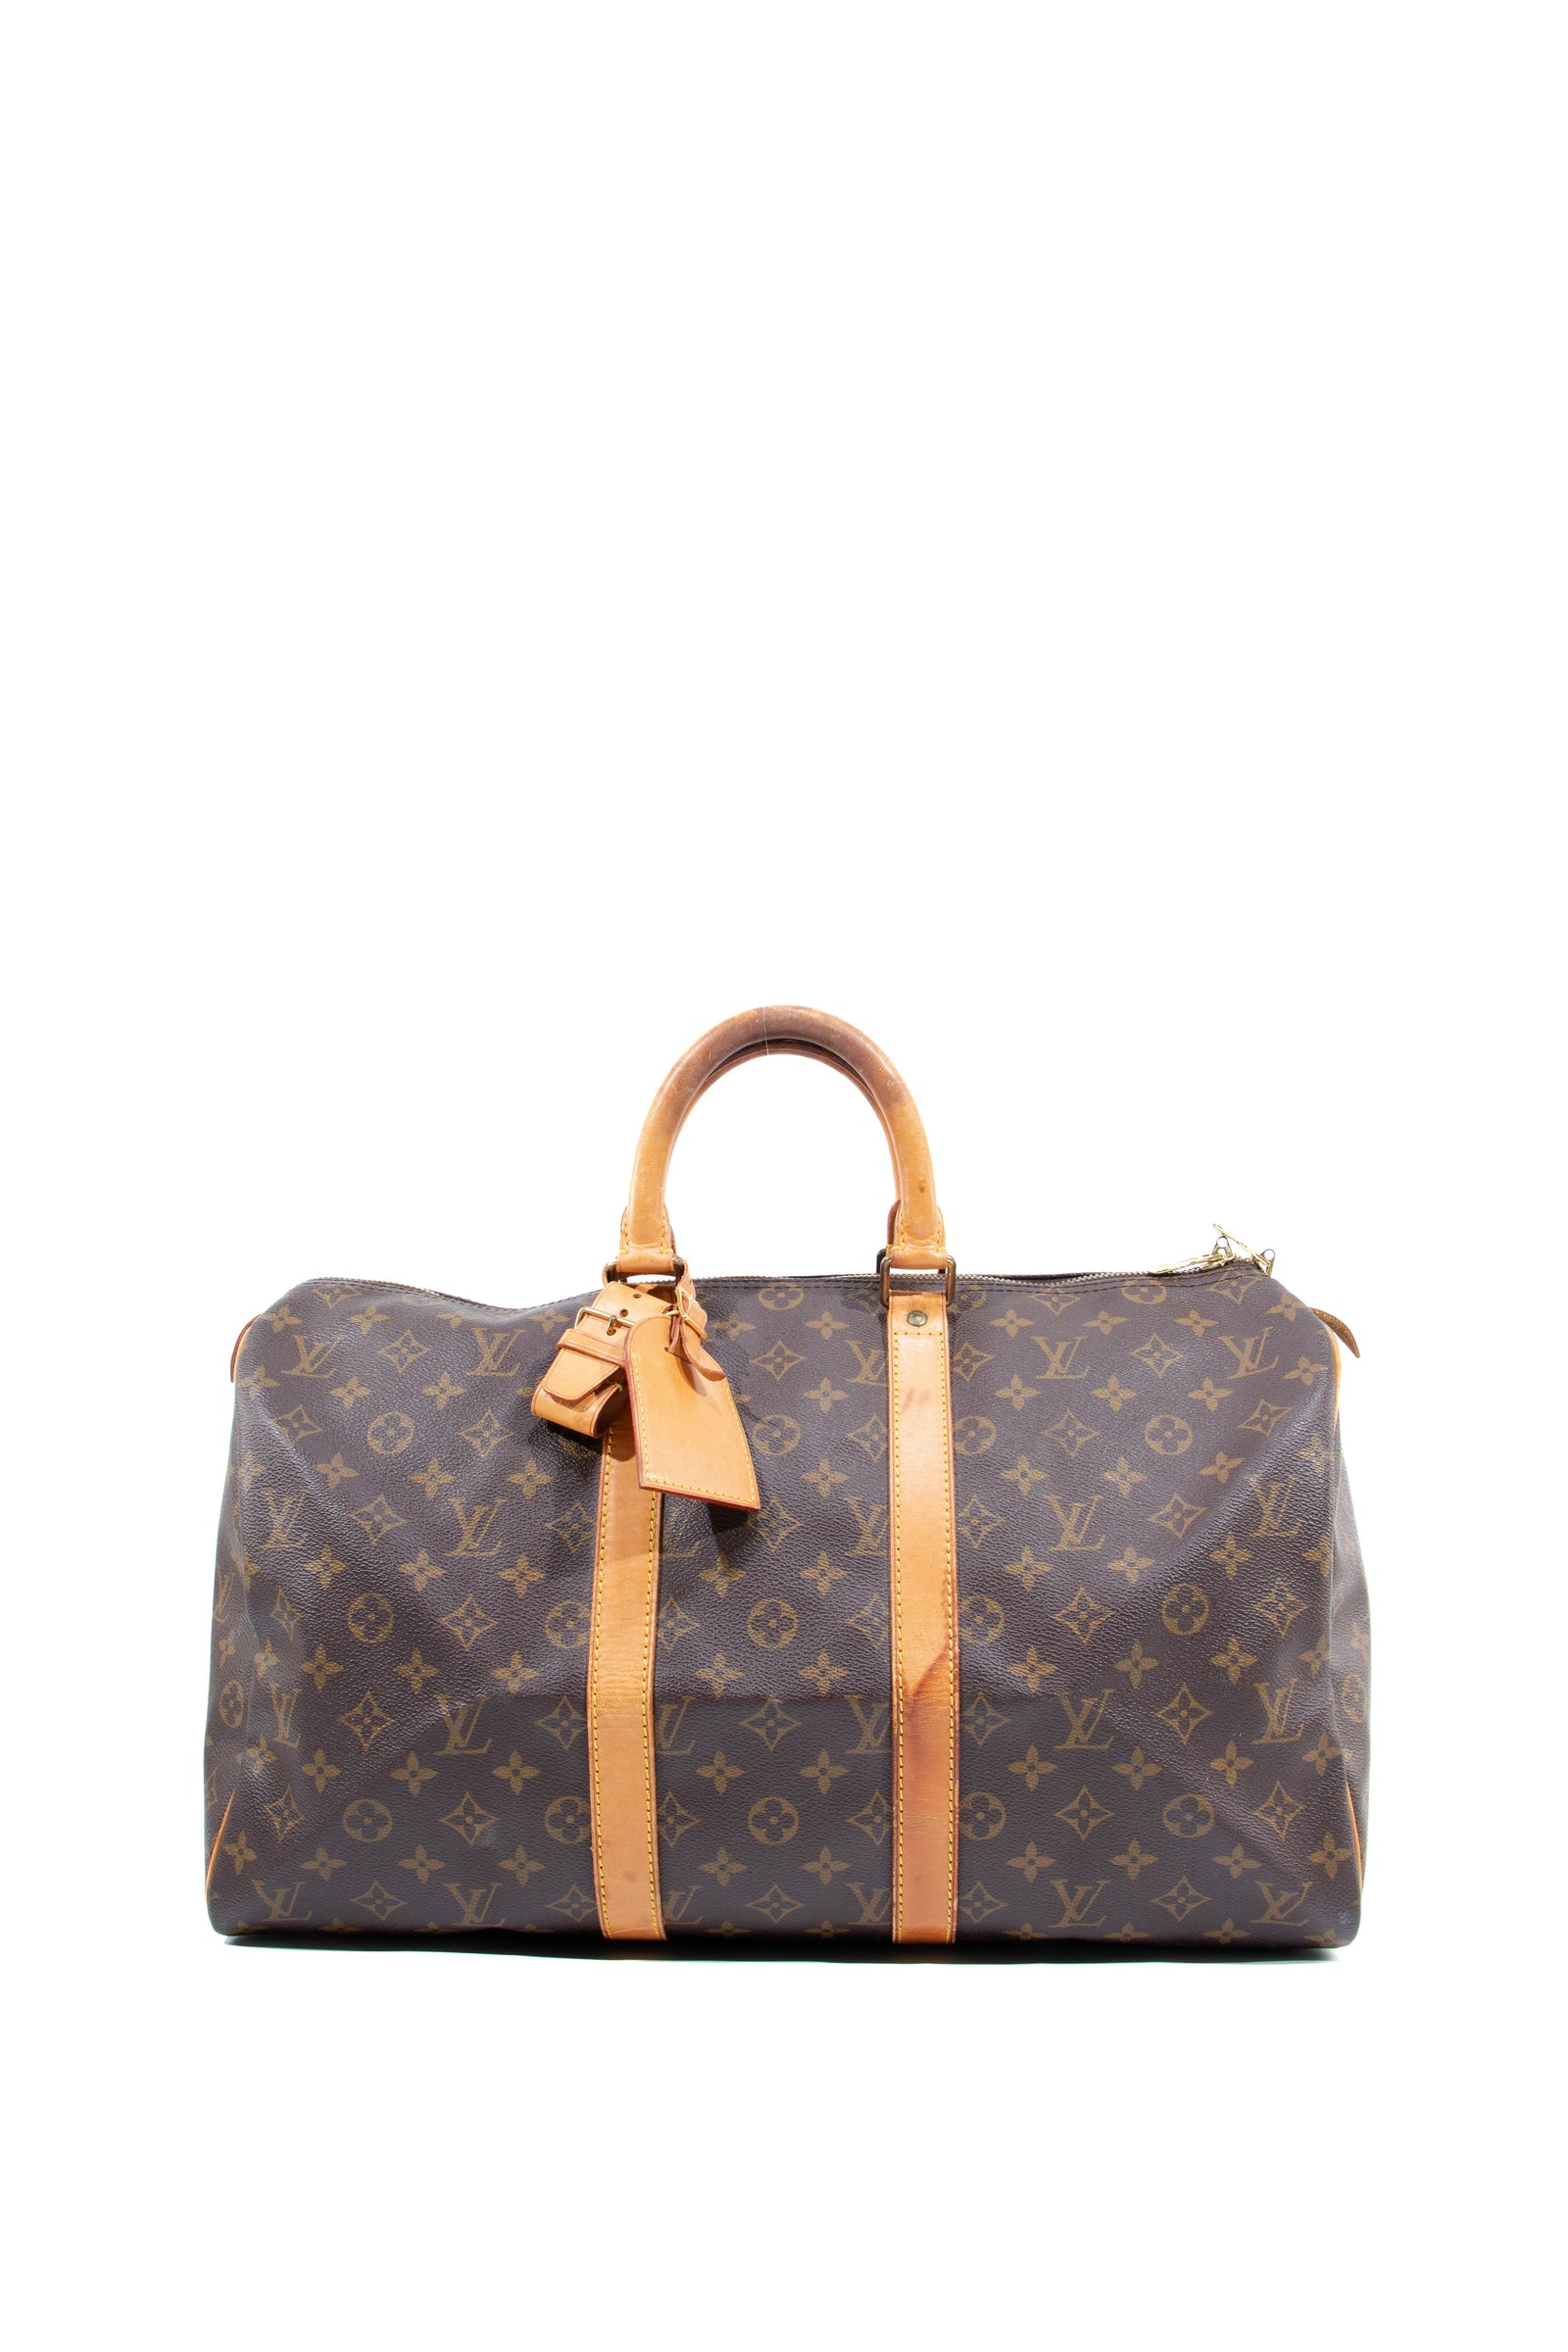 Louis Vuitton - Authenticated Pochette Trunk Verticale Handbag - Cotton Brown Abstract for Women, Never Worn